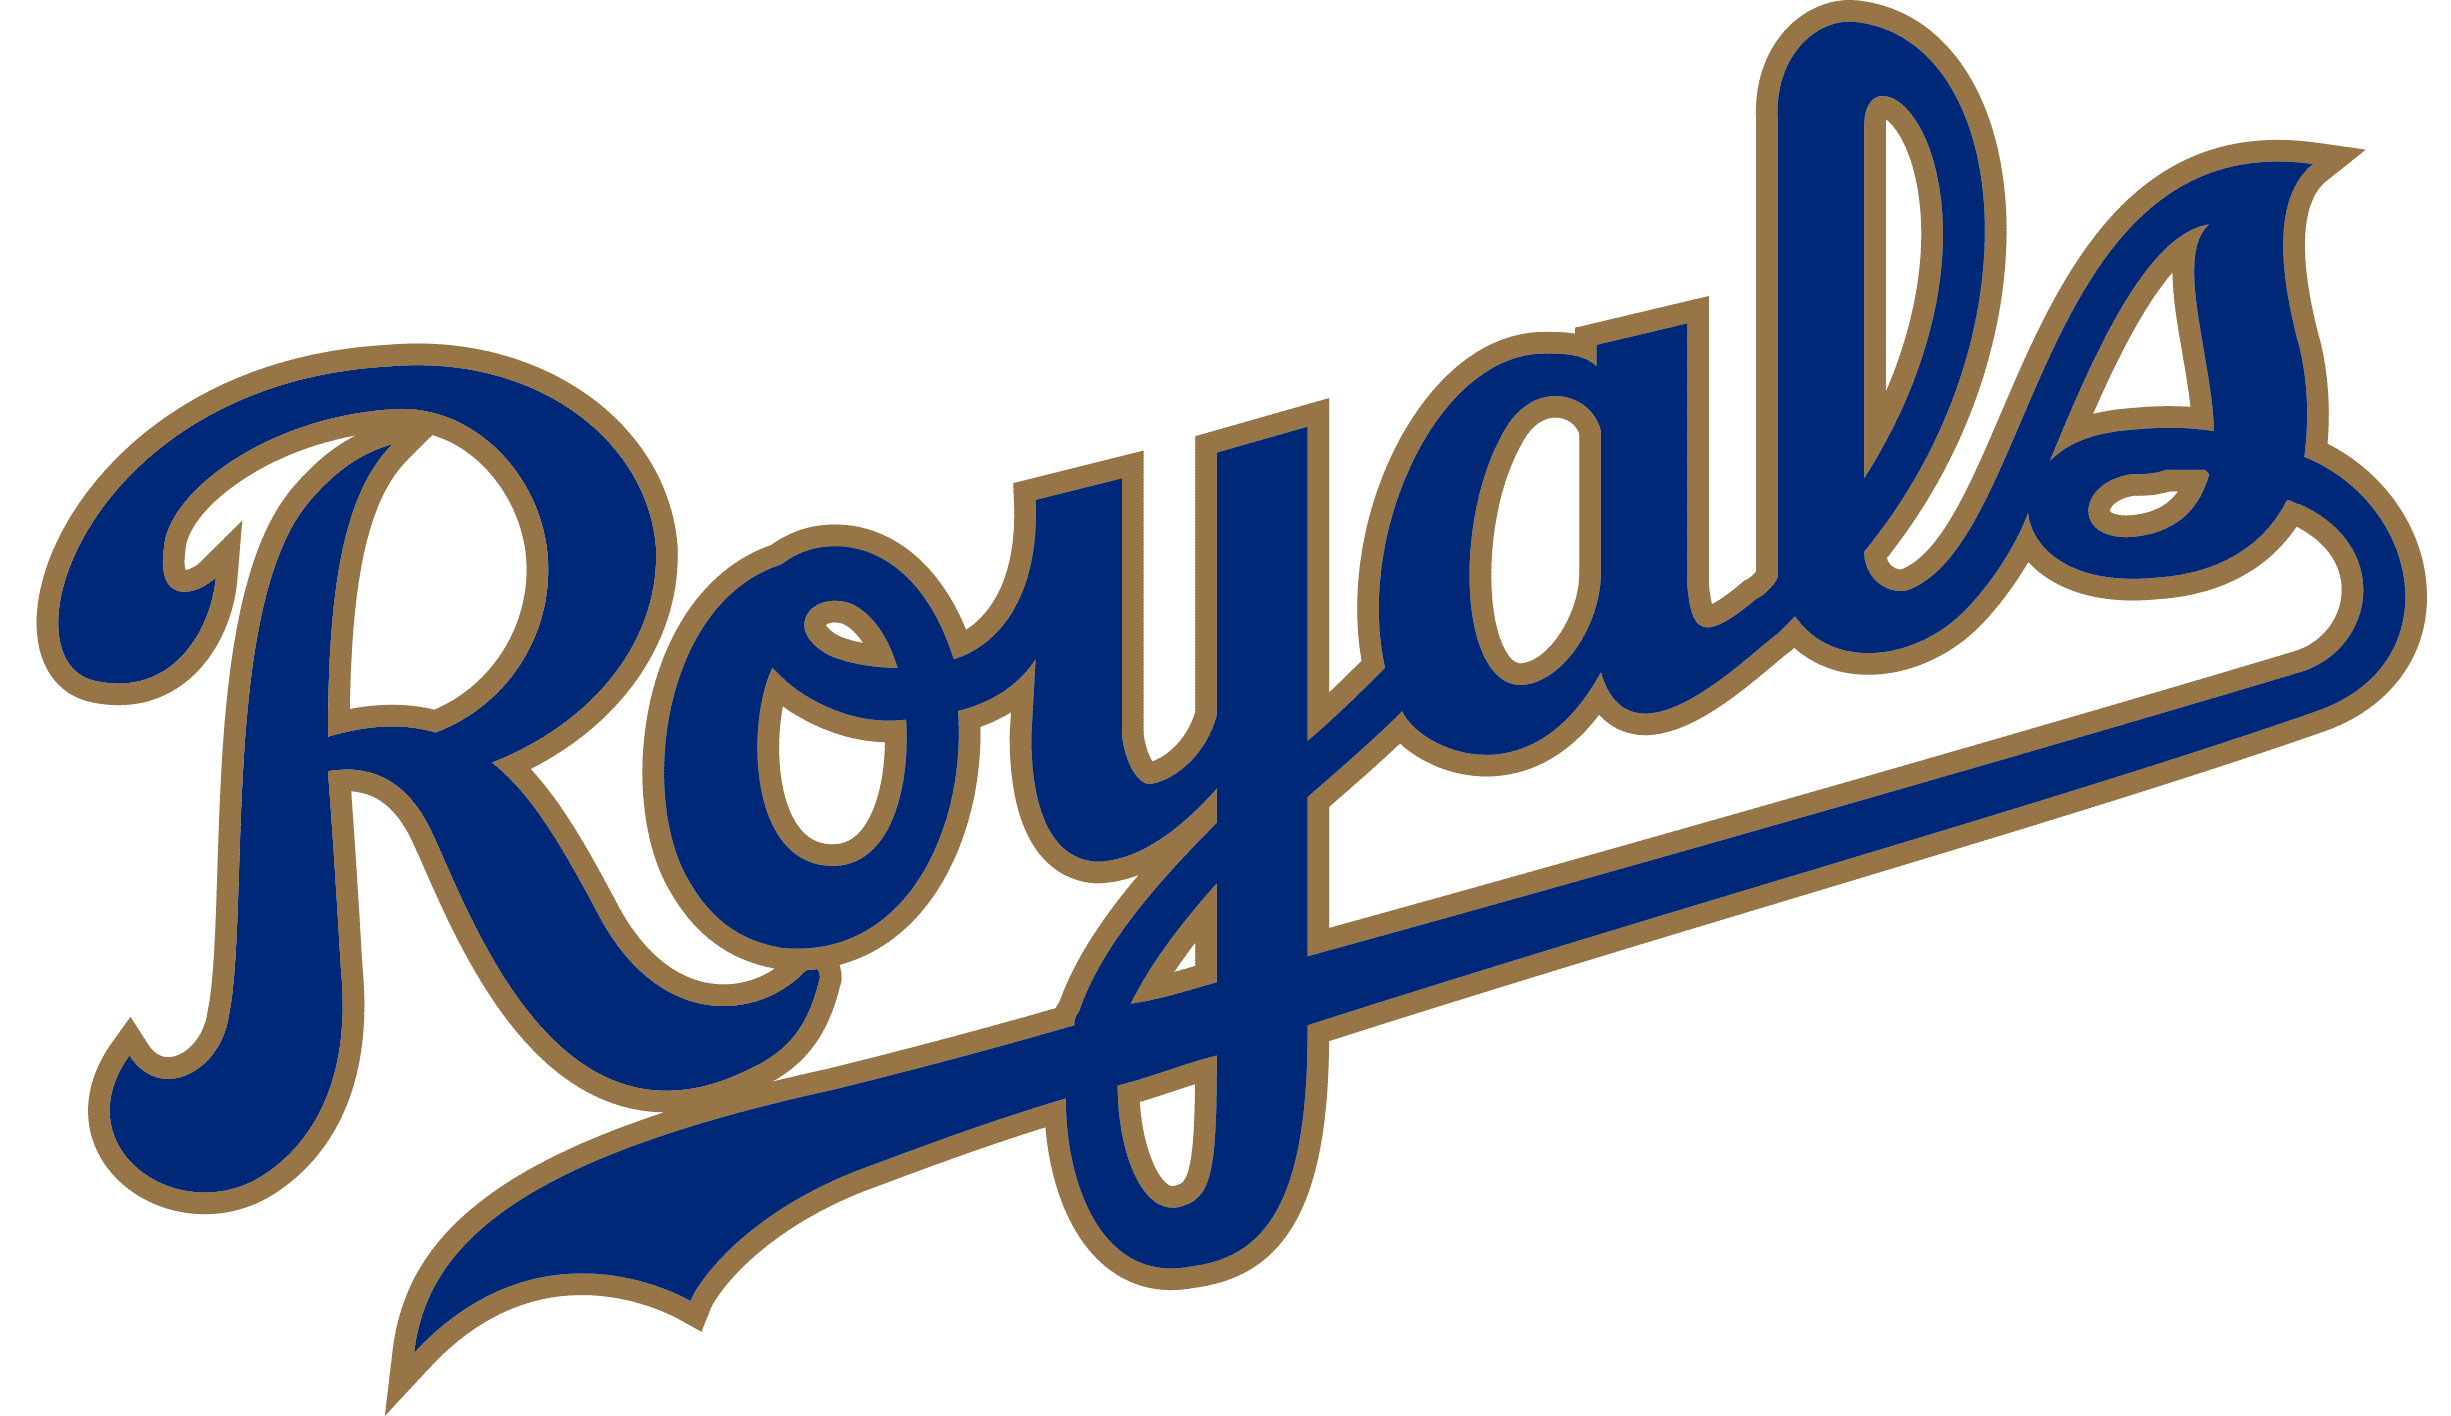 Royals svg, Baseball svg, Royals baseball, grunge svg, Royals